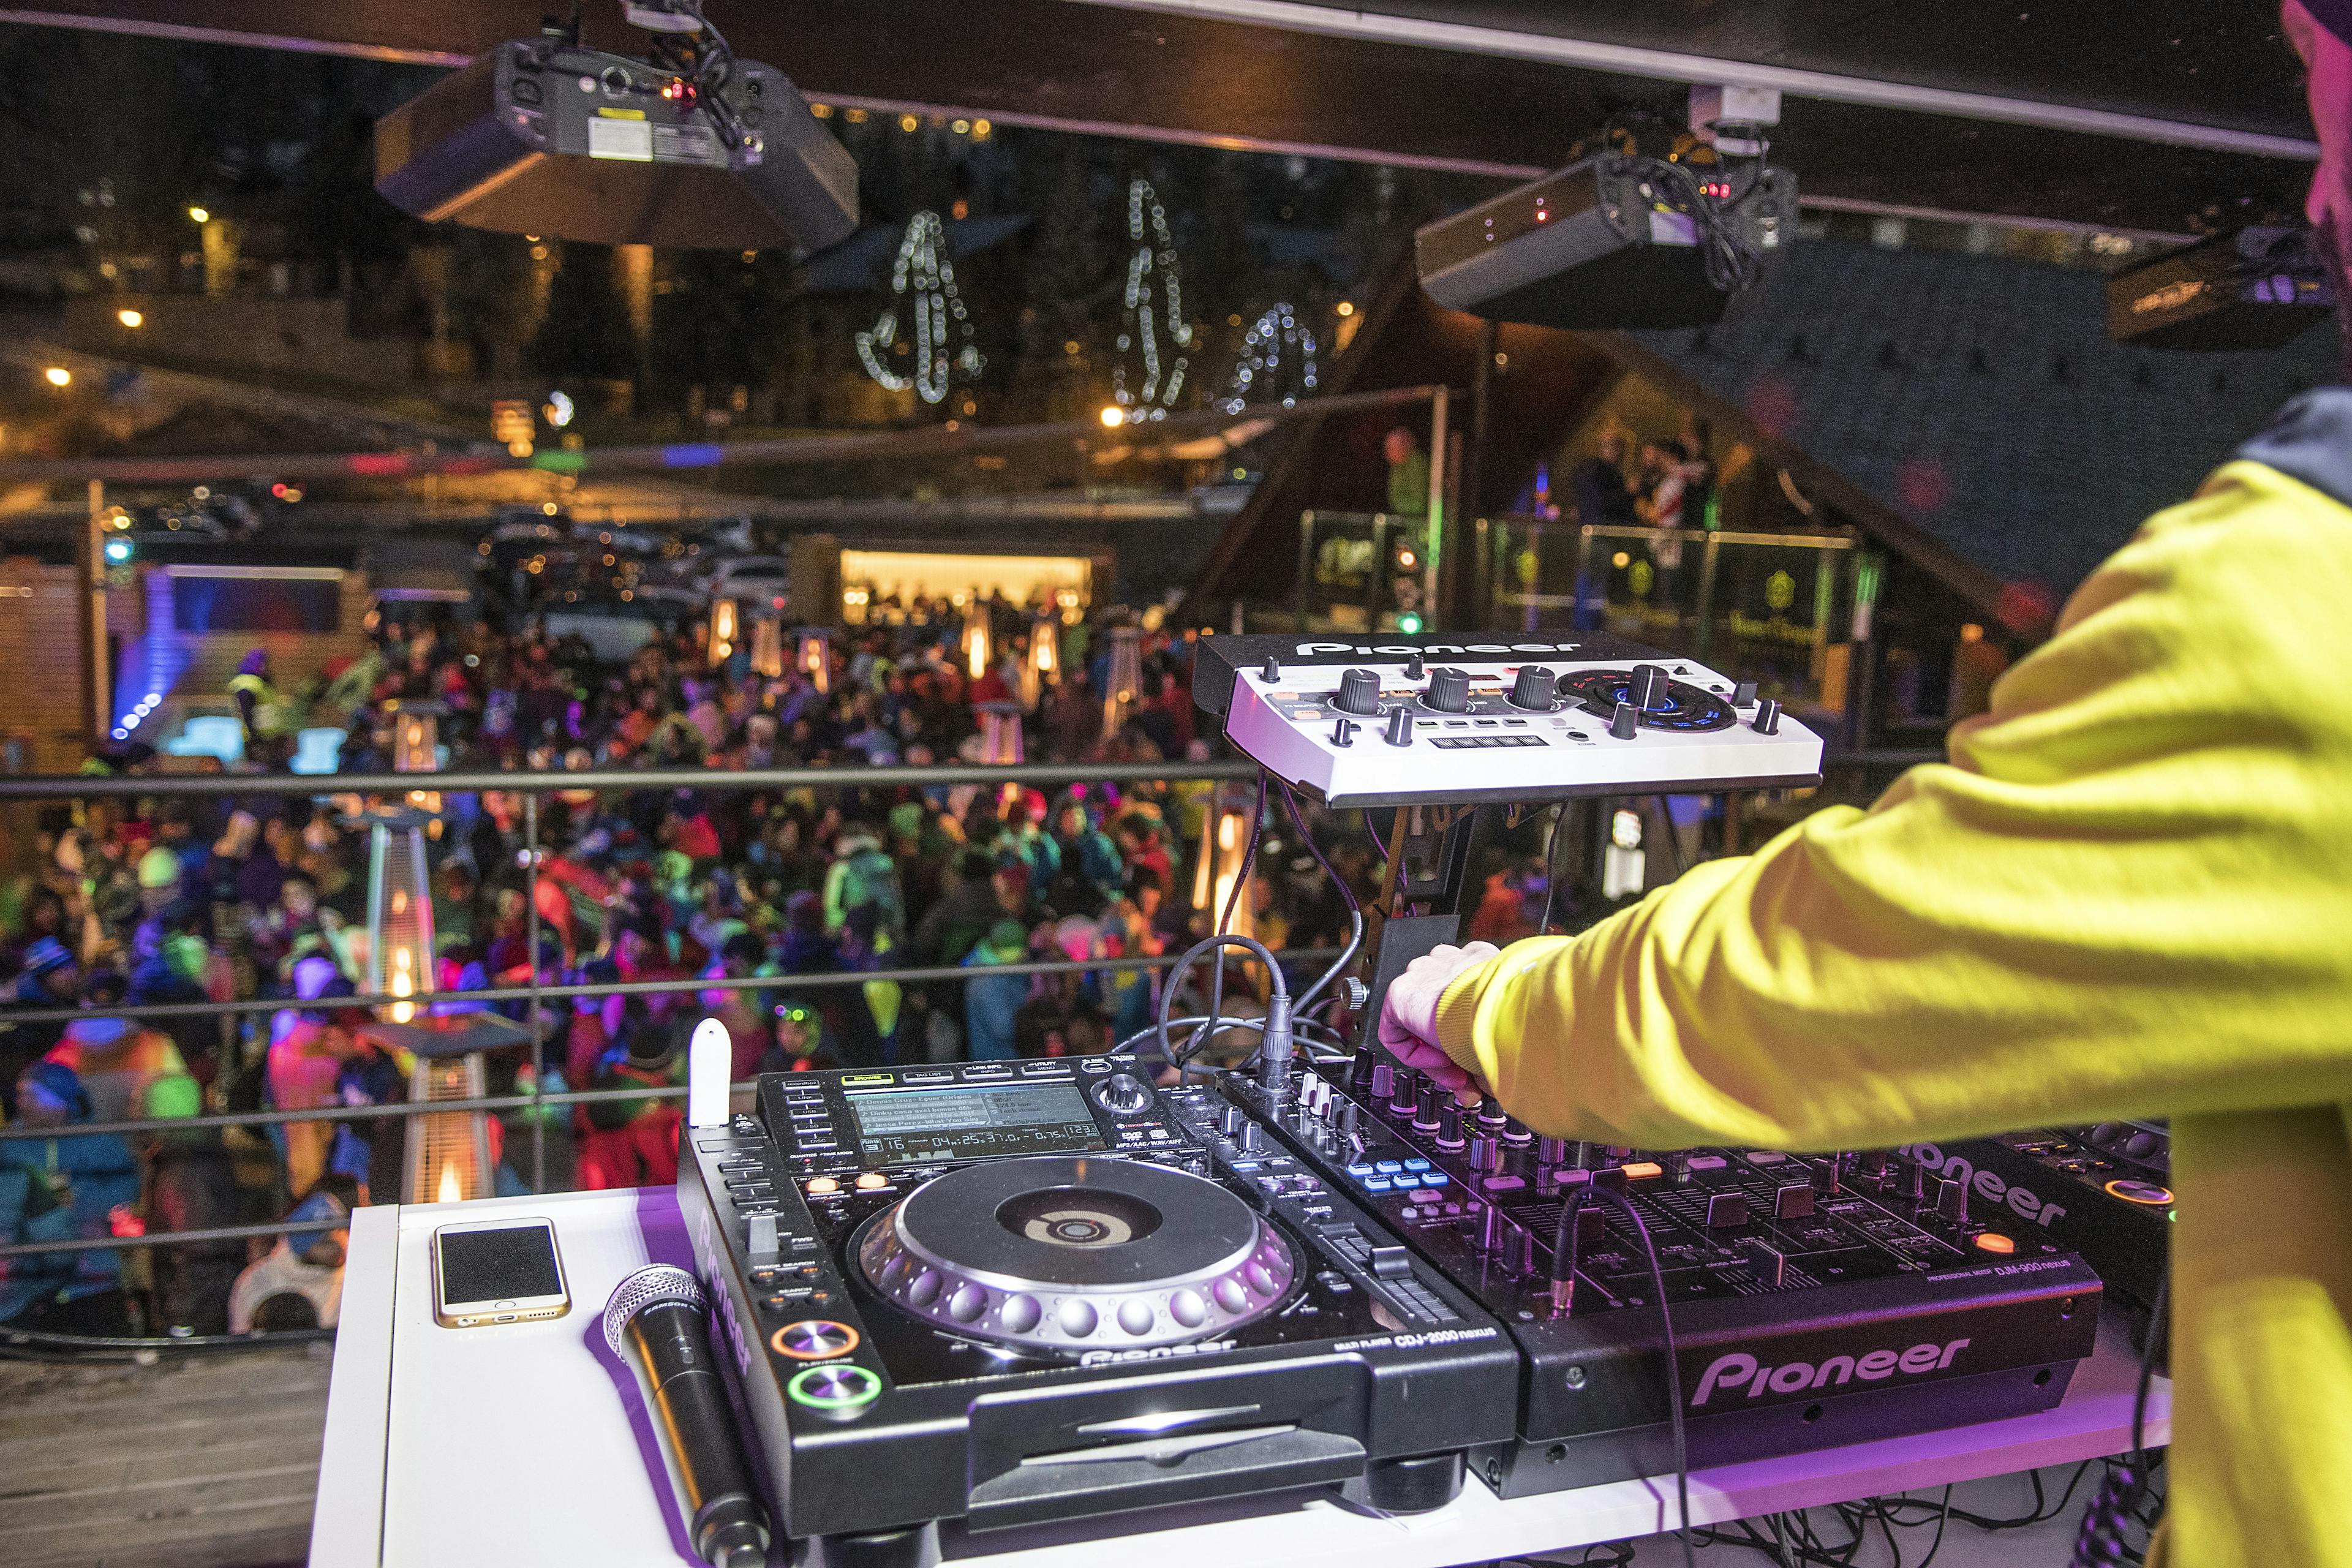 DJ playing tunes for skiiers at Apres nightclub